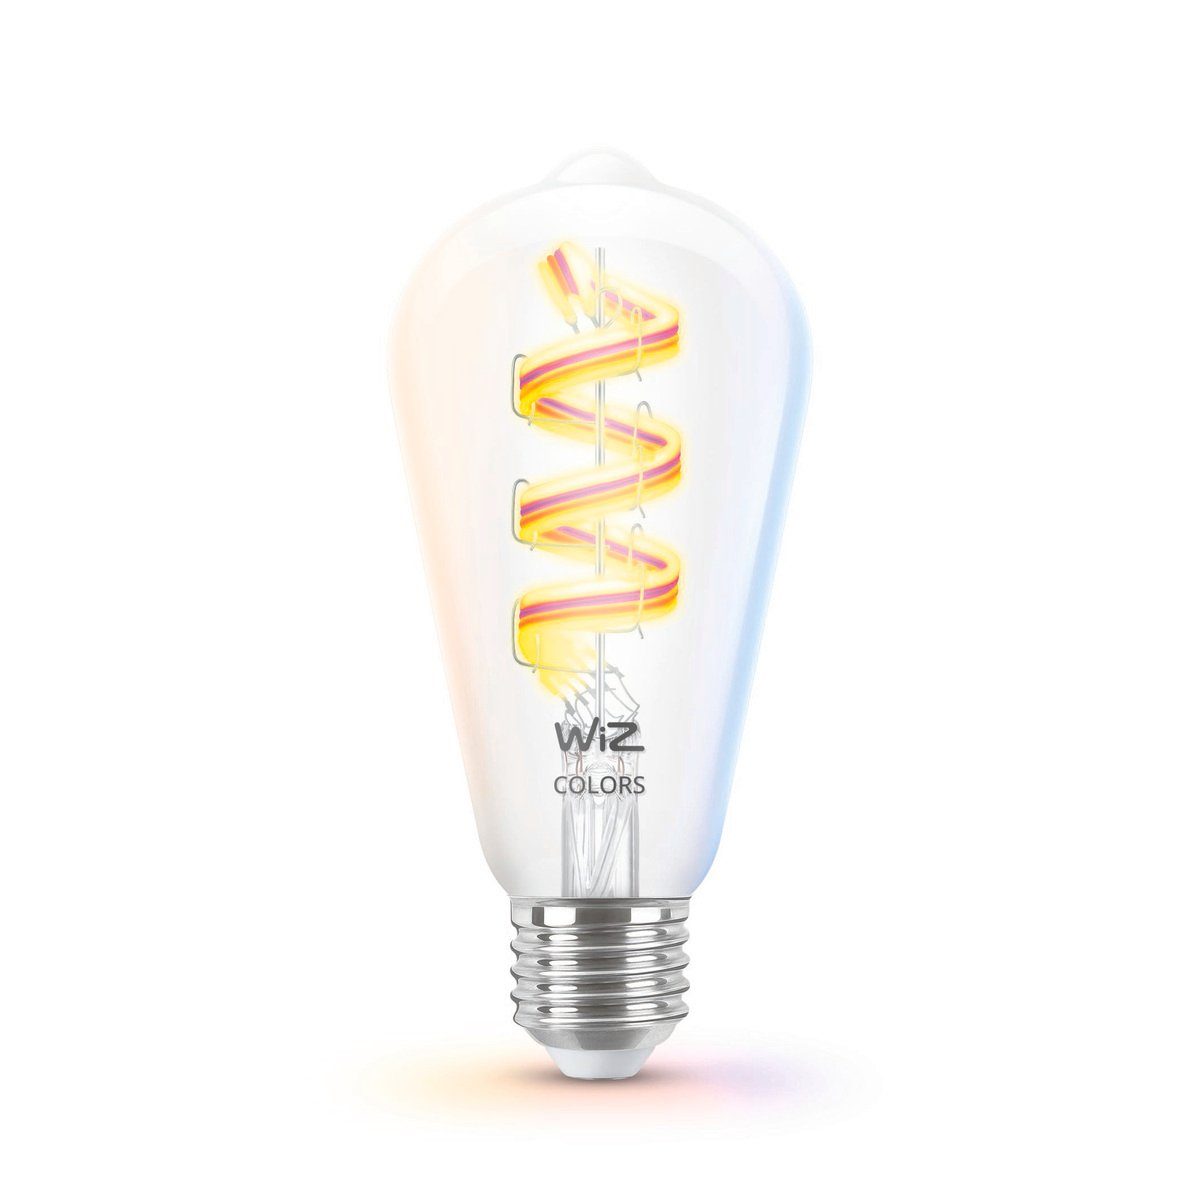 Smarte LED fest integriert WiZ LED-Lampe, LED-Leuchte